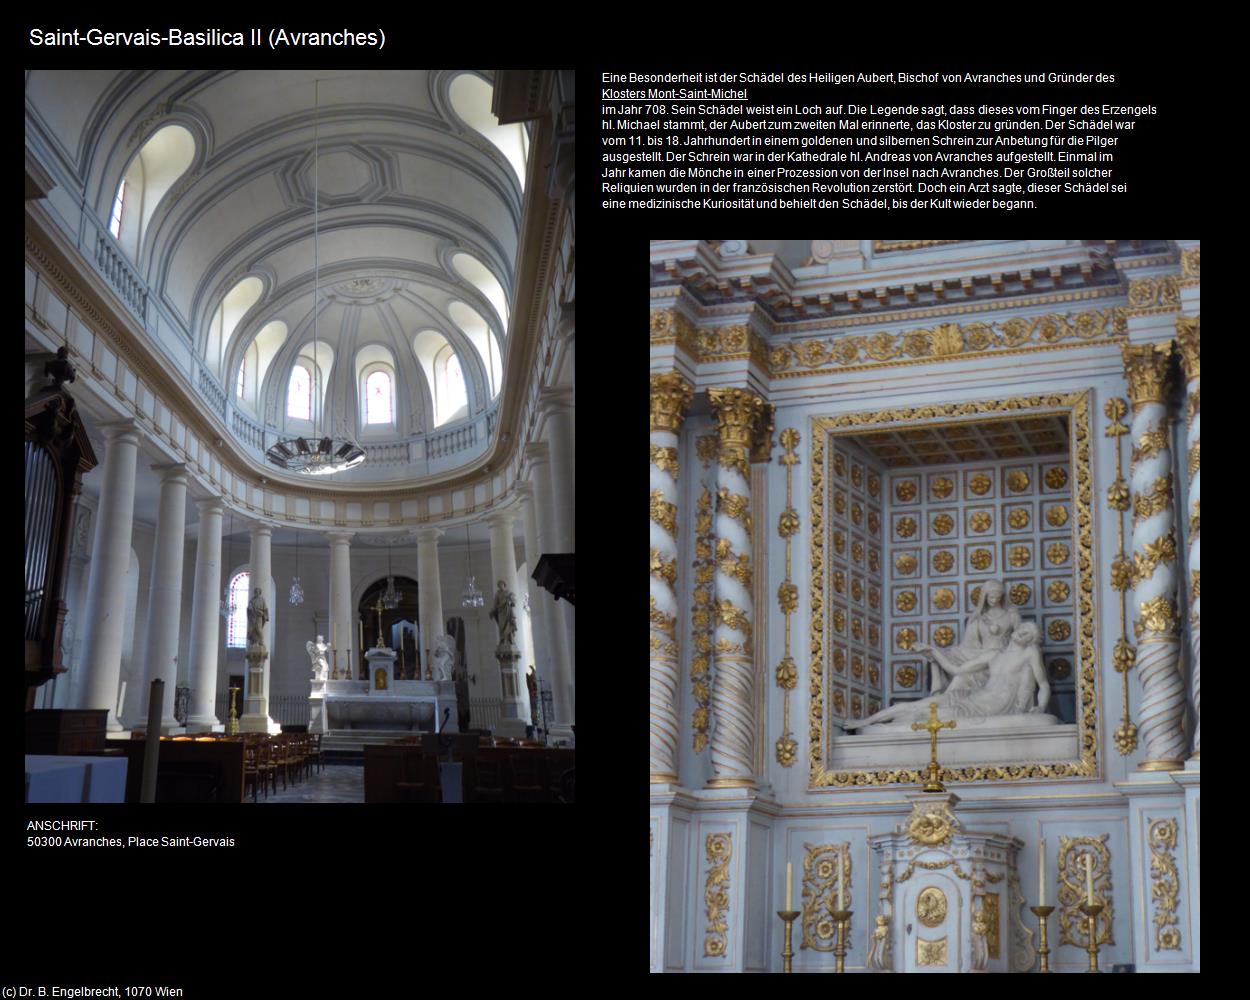 Saint-Gervais-Basilica II  (Avranches (FR-NOR)) in Kulturatlas-FRANKREICH(c)B.Engelbrecht